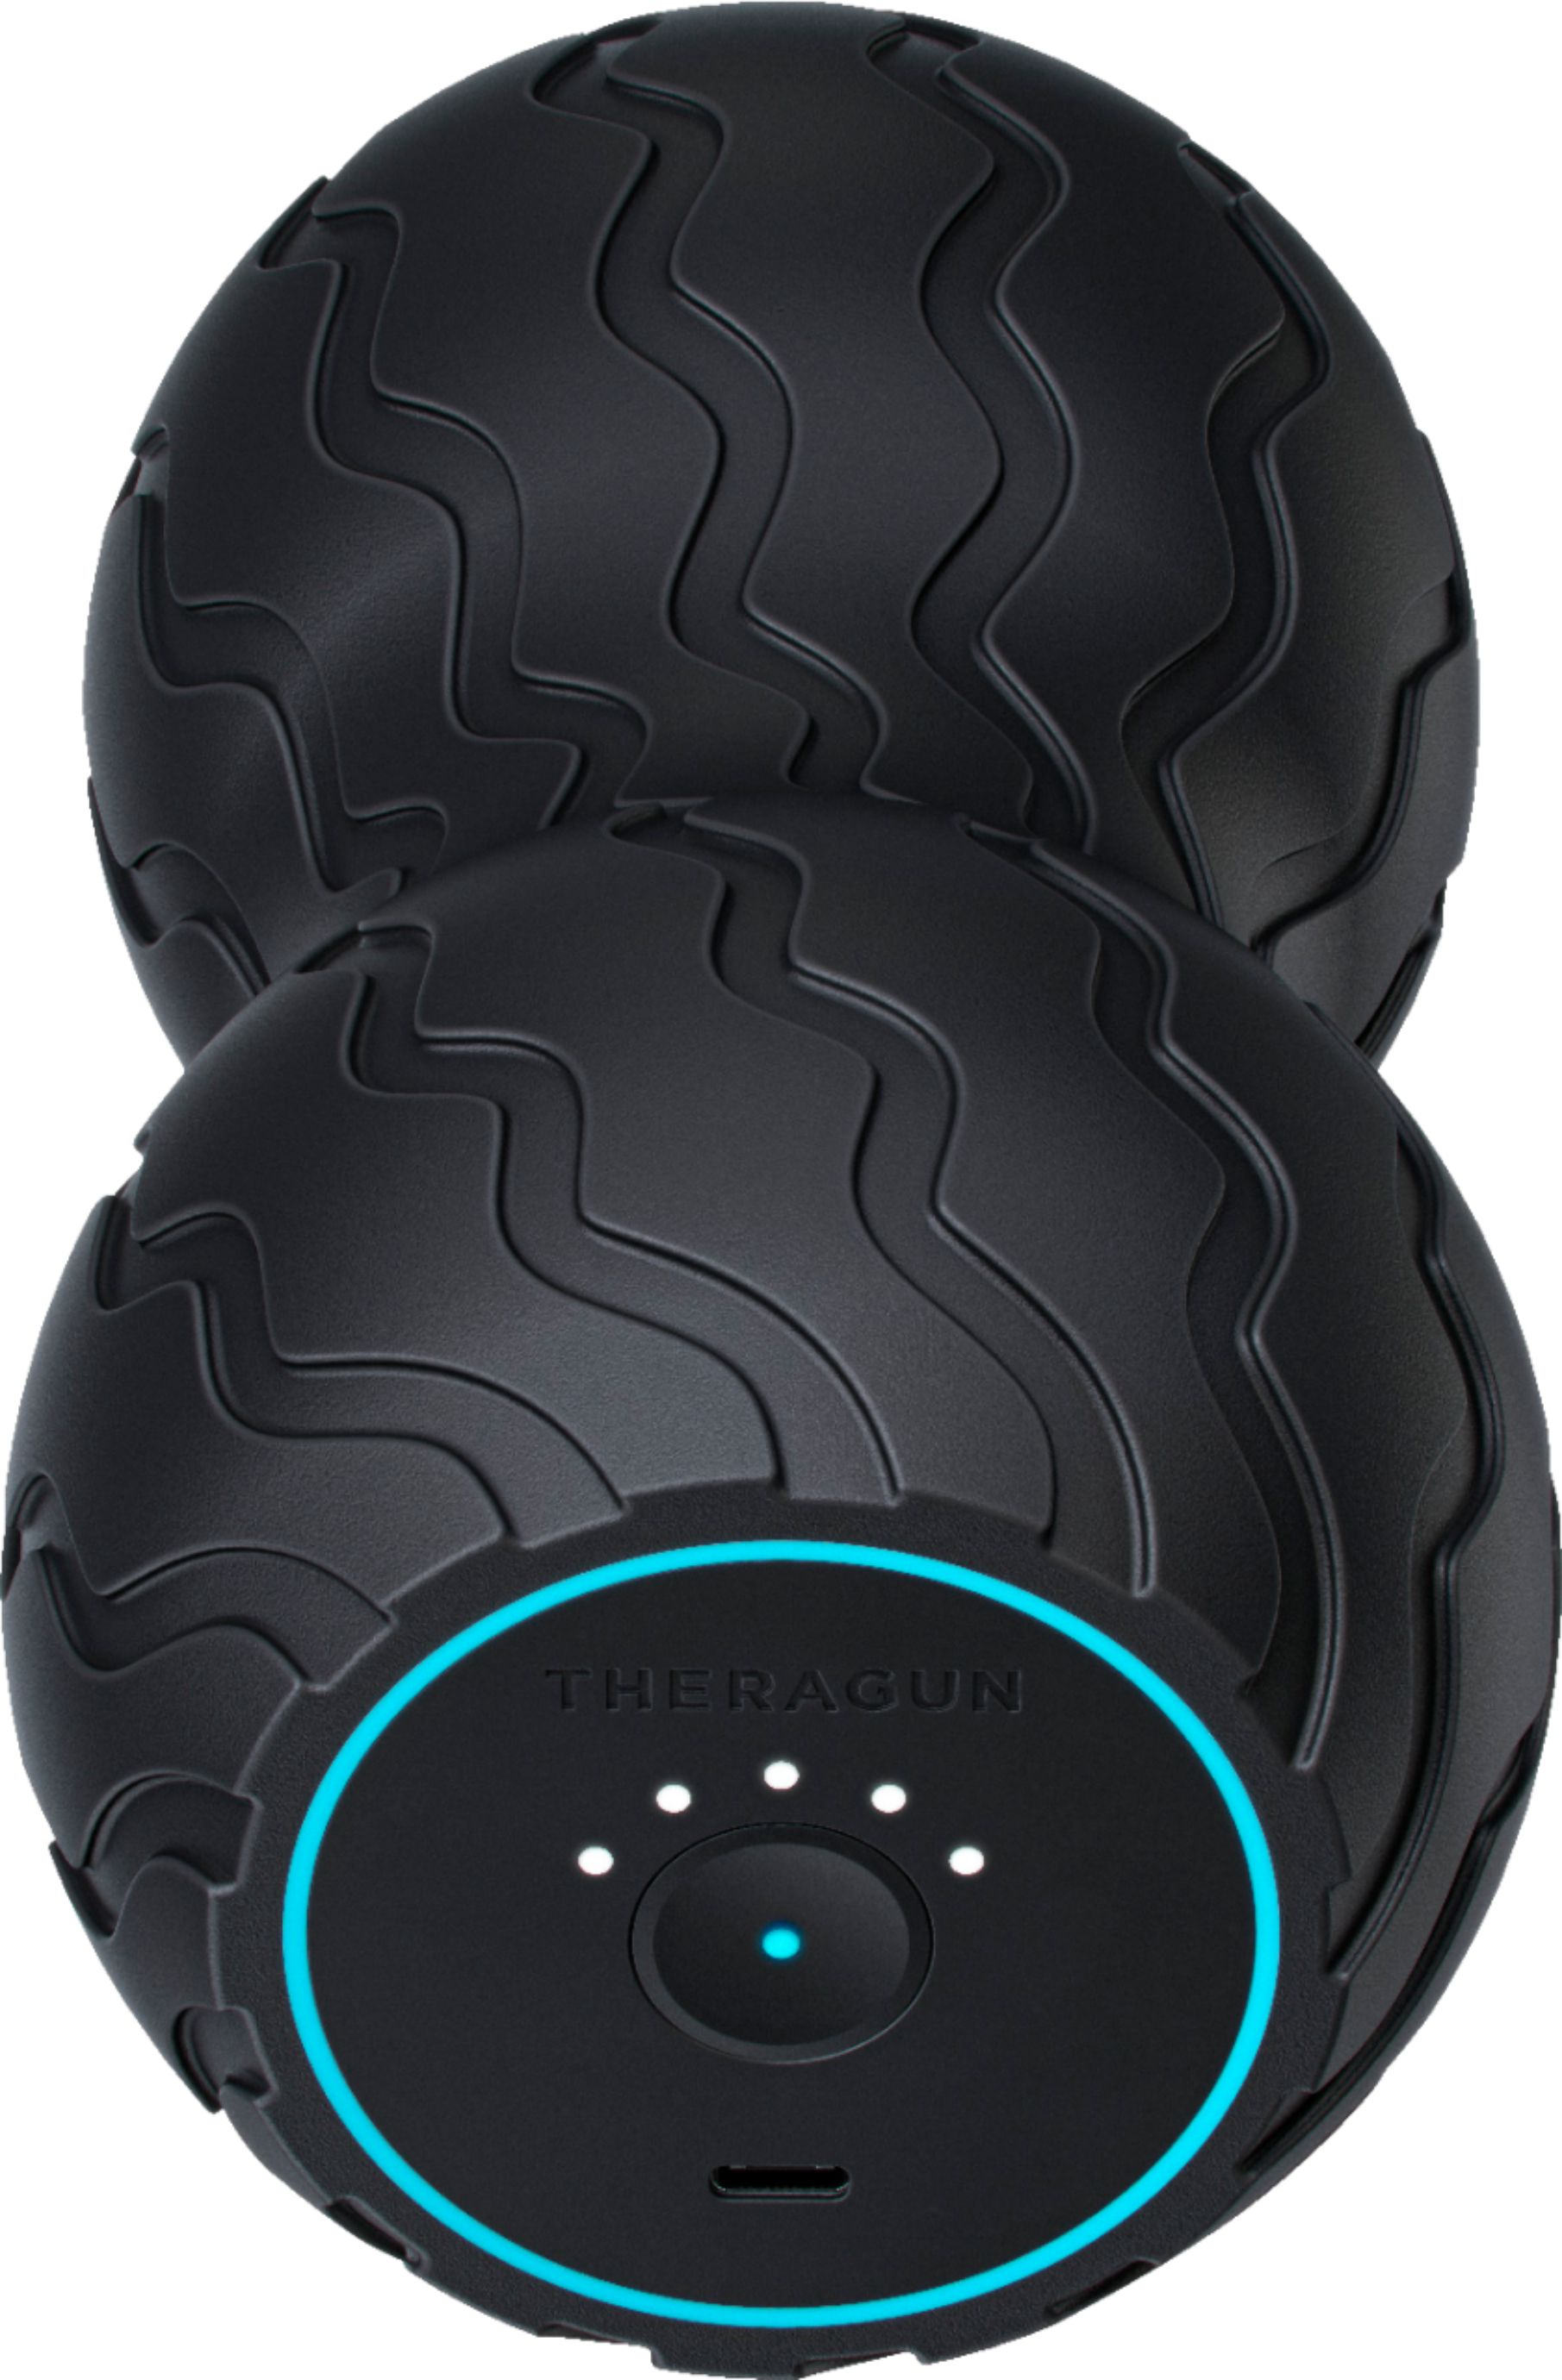 Therabody Wave Duo Vibrating Massage Device Black WAVEDUO-US - Best Buy